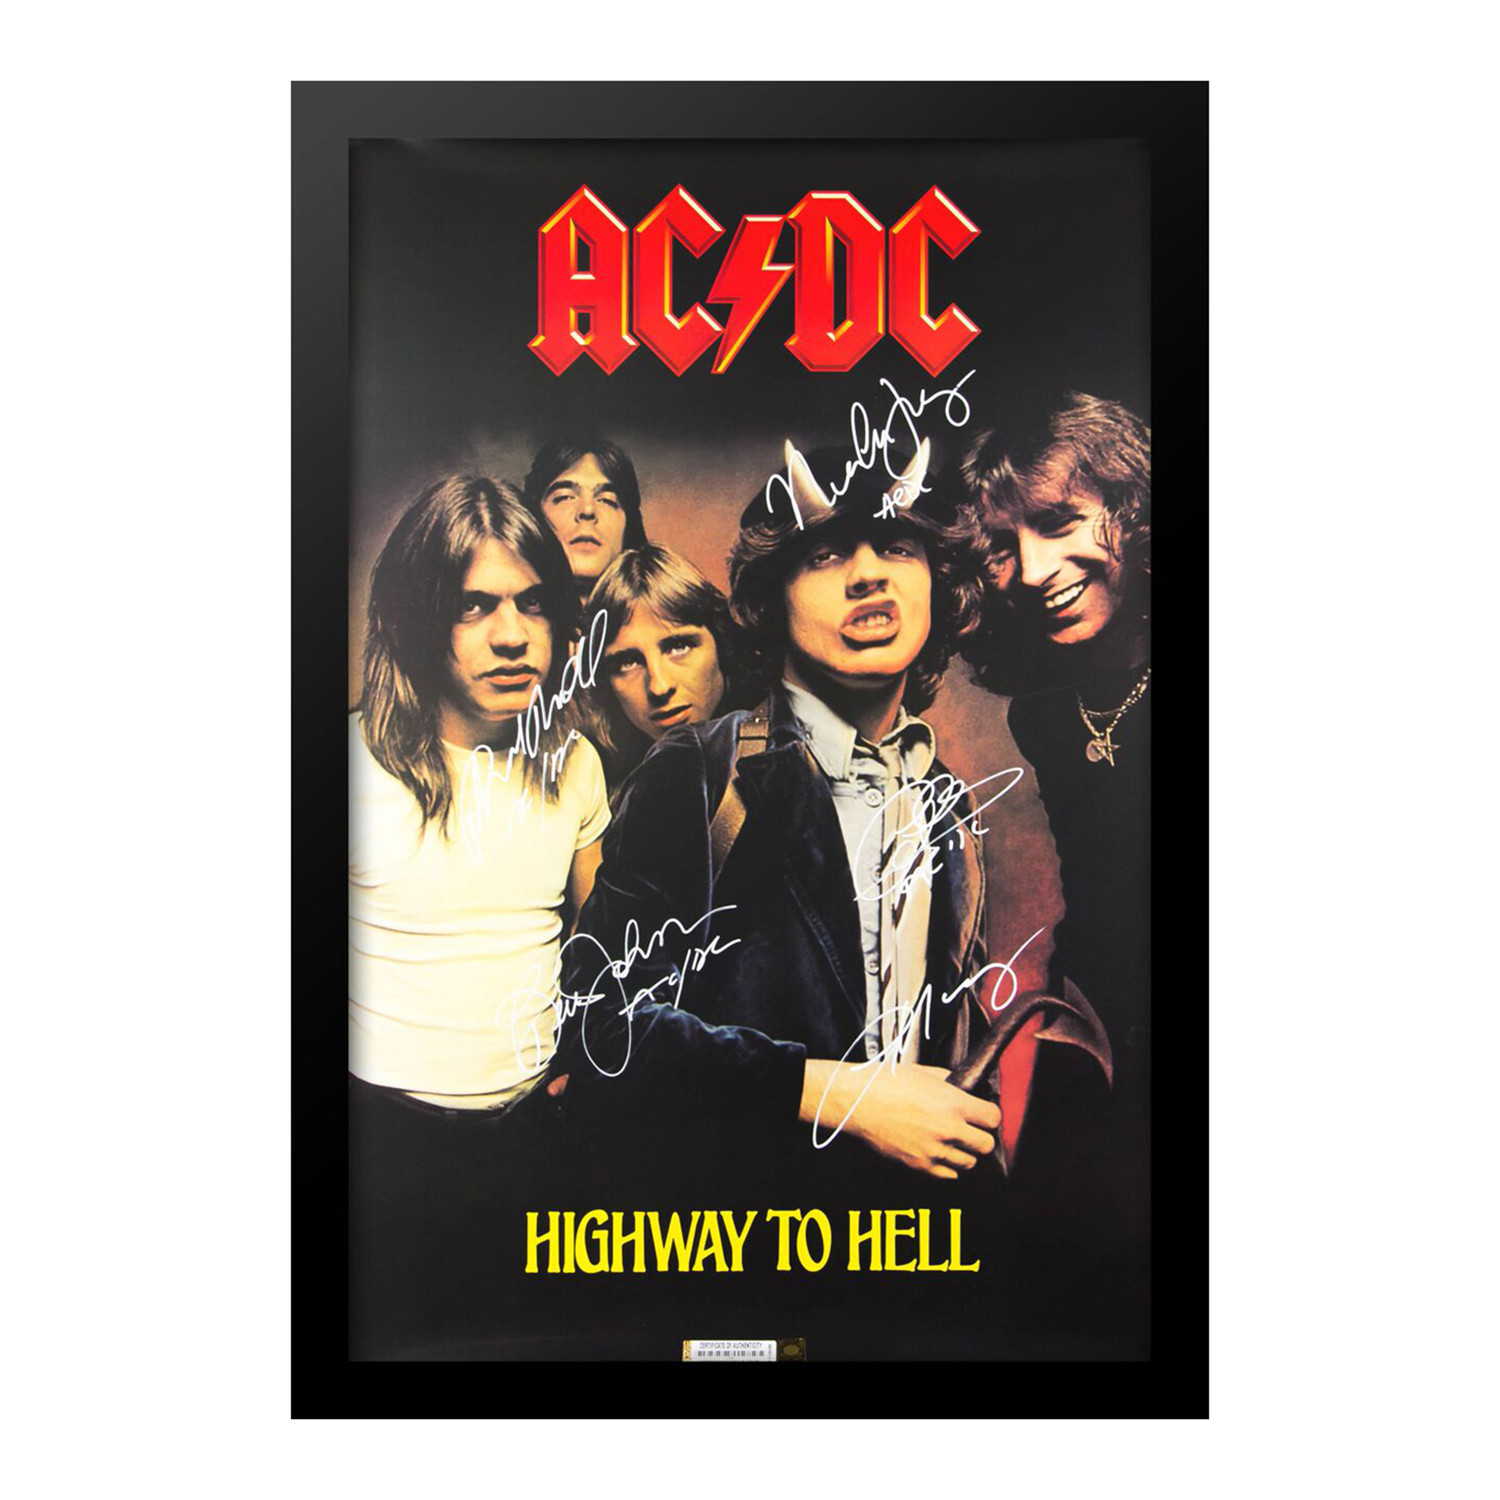 Acdc highway to hell. Группа AC/DC Highway to Hell. AC/DC группа обложки. ACDC gruppa постеры. AC DC обложки альбомов.